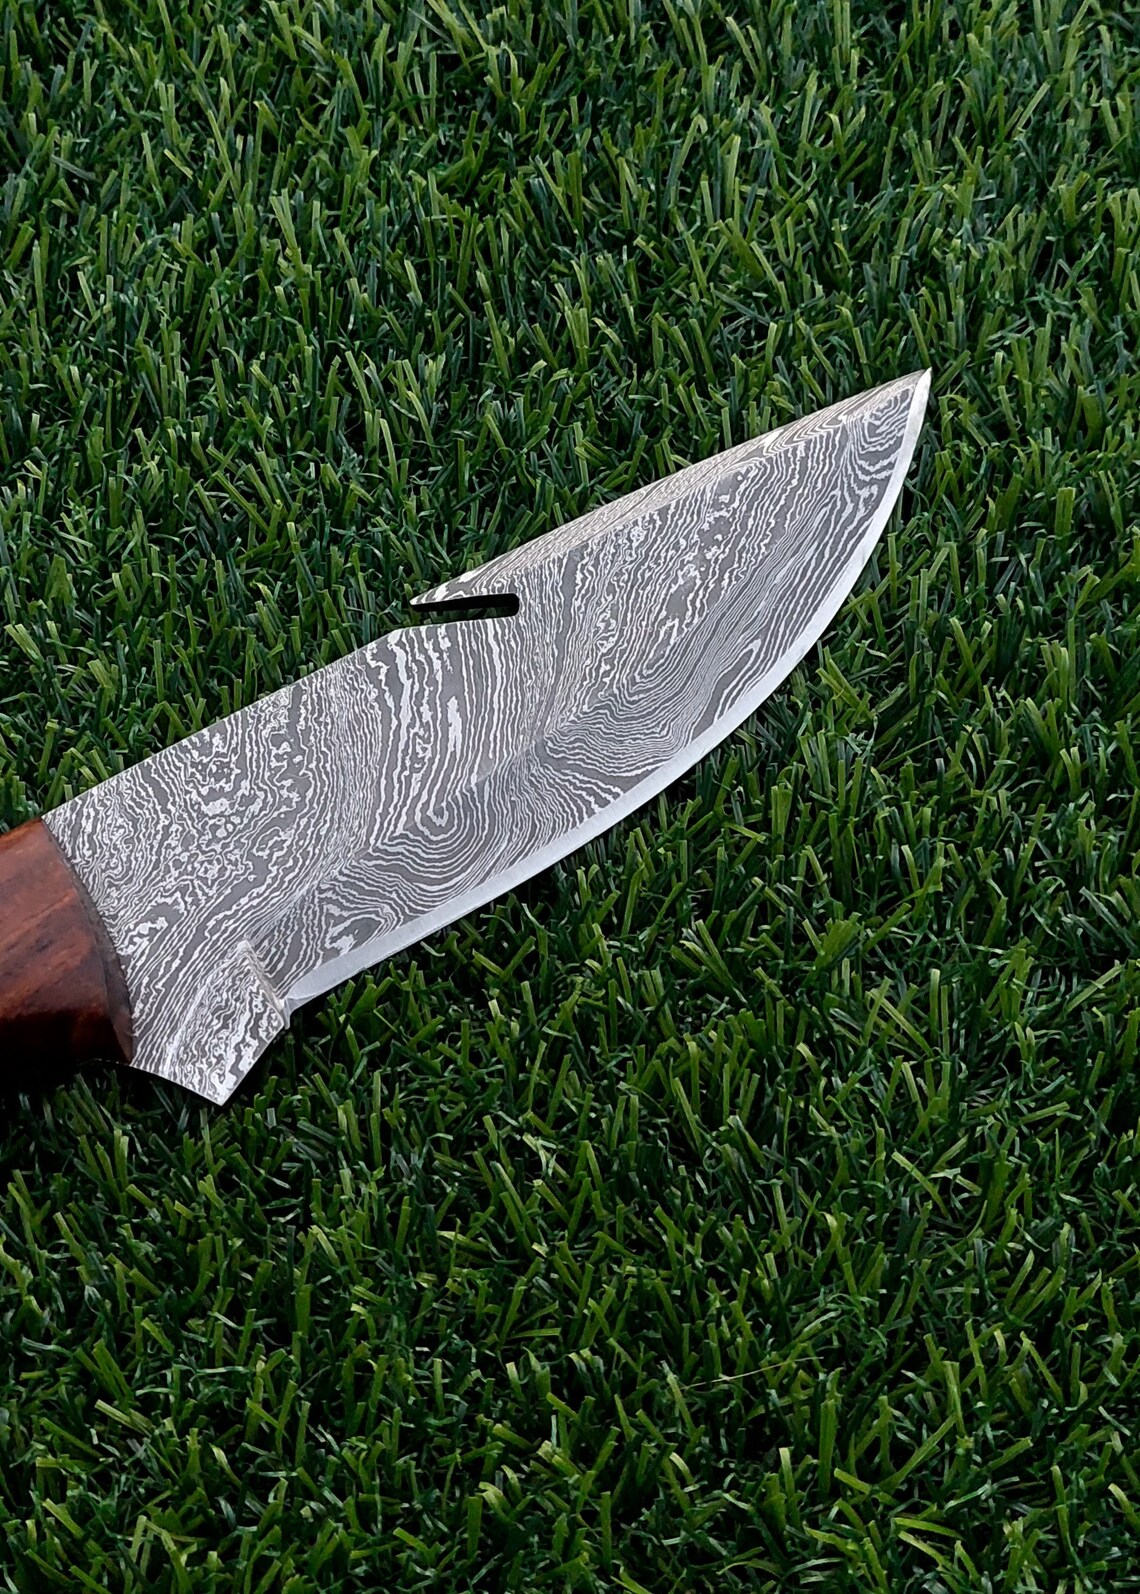 Beautiful gut hook skinner knife, Damascus Hunting Knife, Handmade Knives Personalized Knife gift, Bushcraft knife, Camping knife